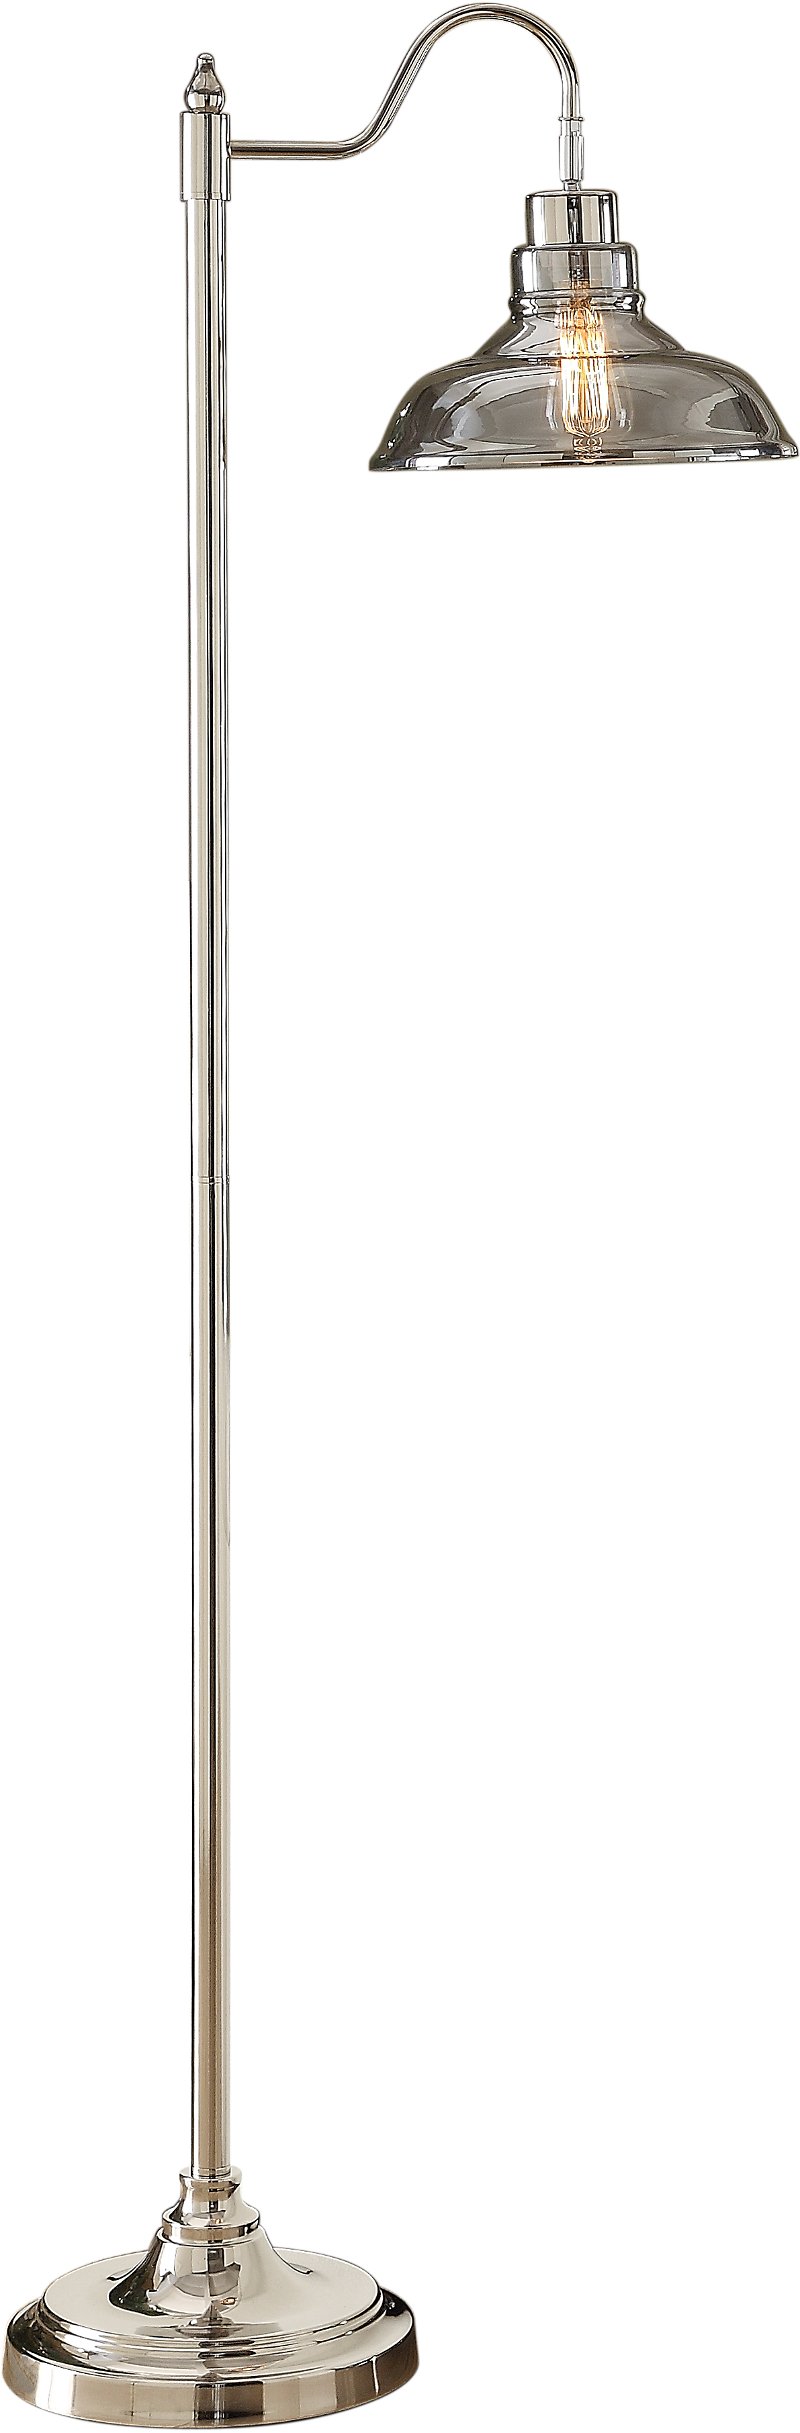 Nickel Floor Lamp With Smoke Glass, Standing Lamp Glass Shade